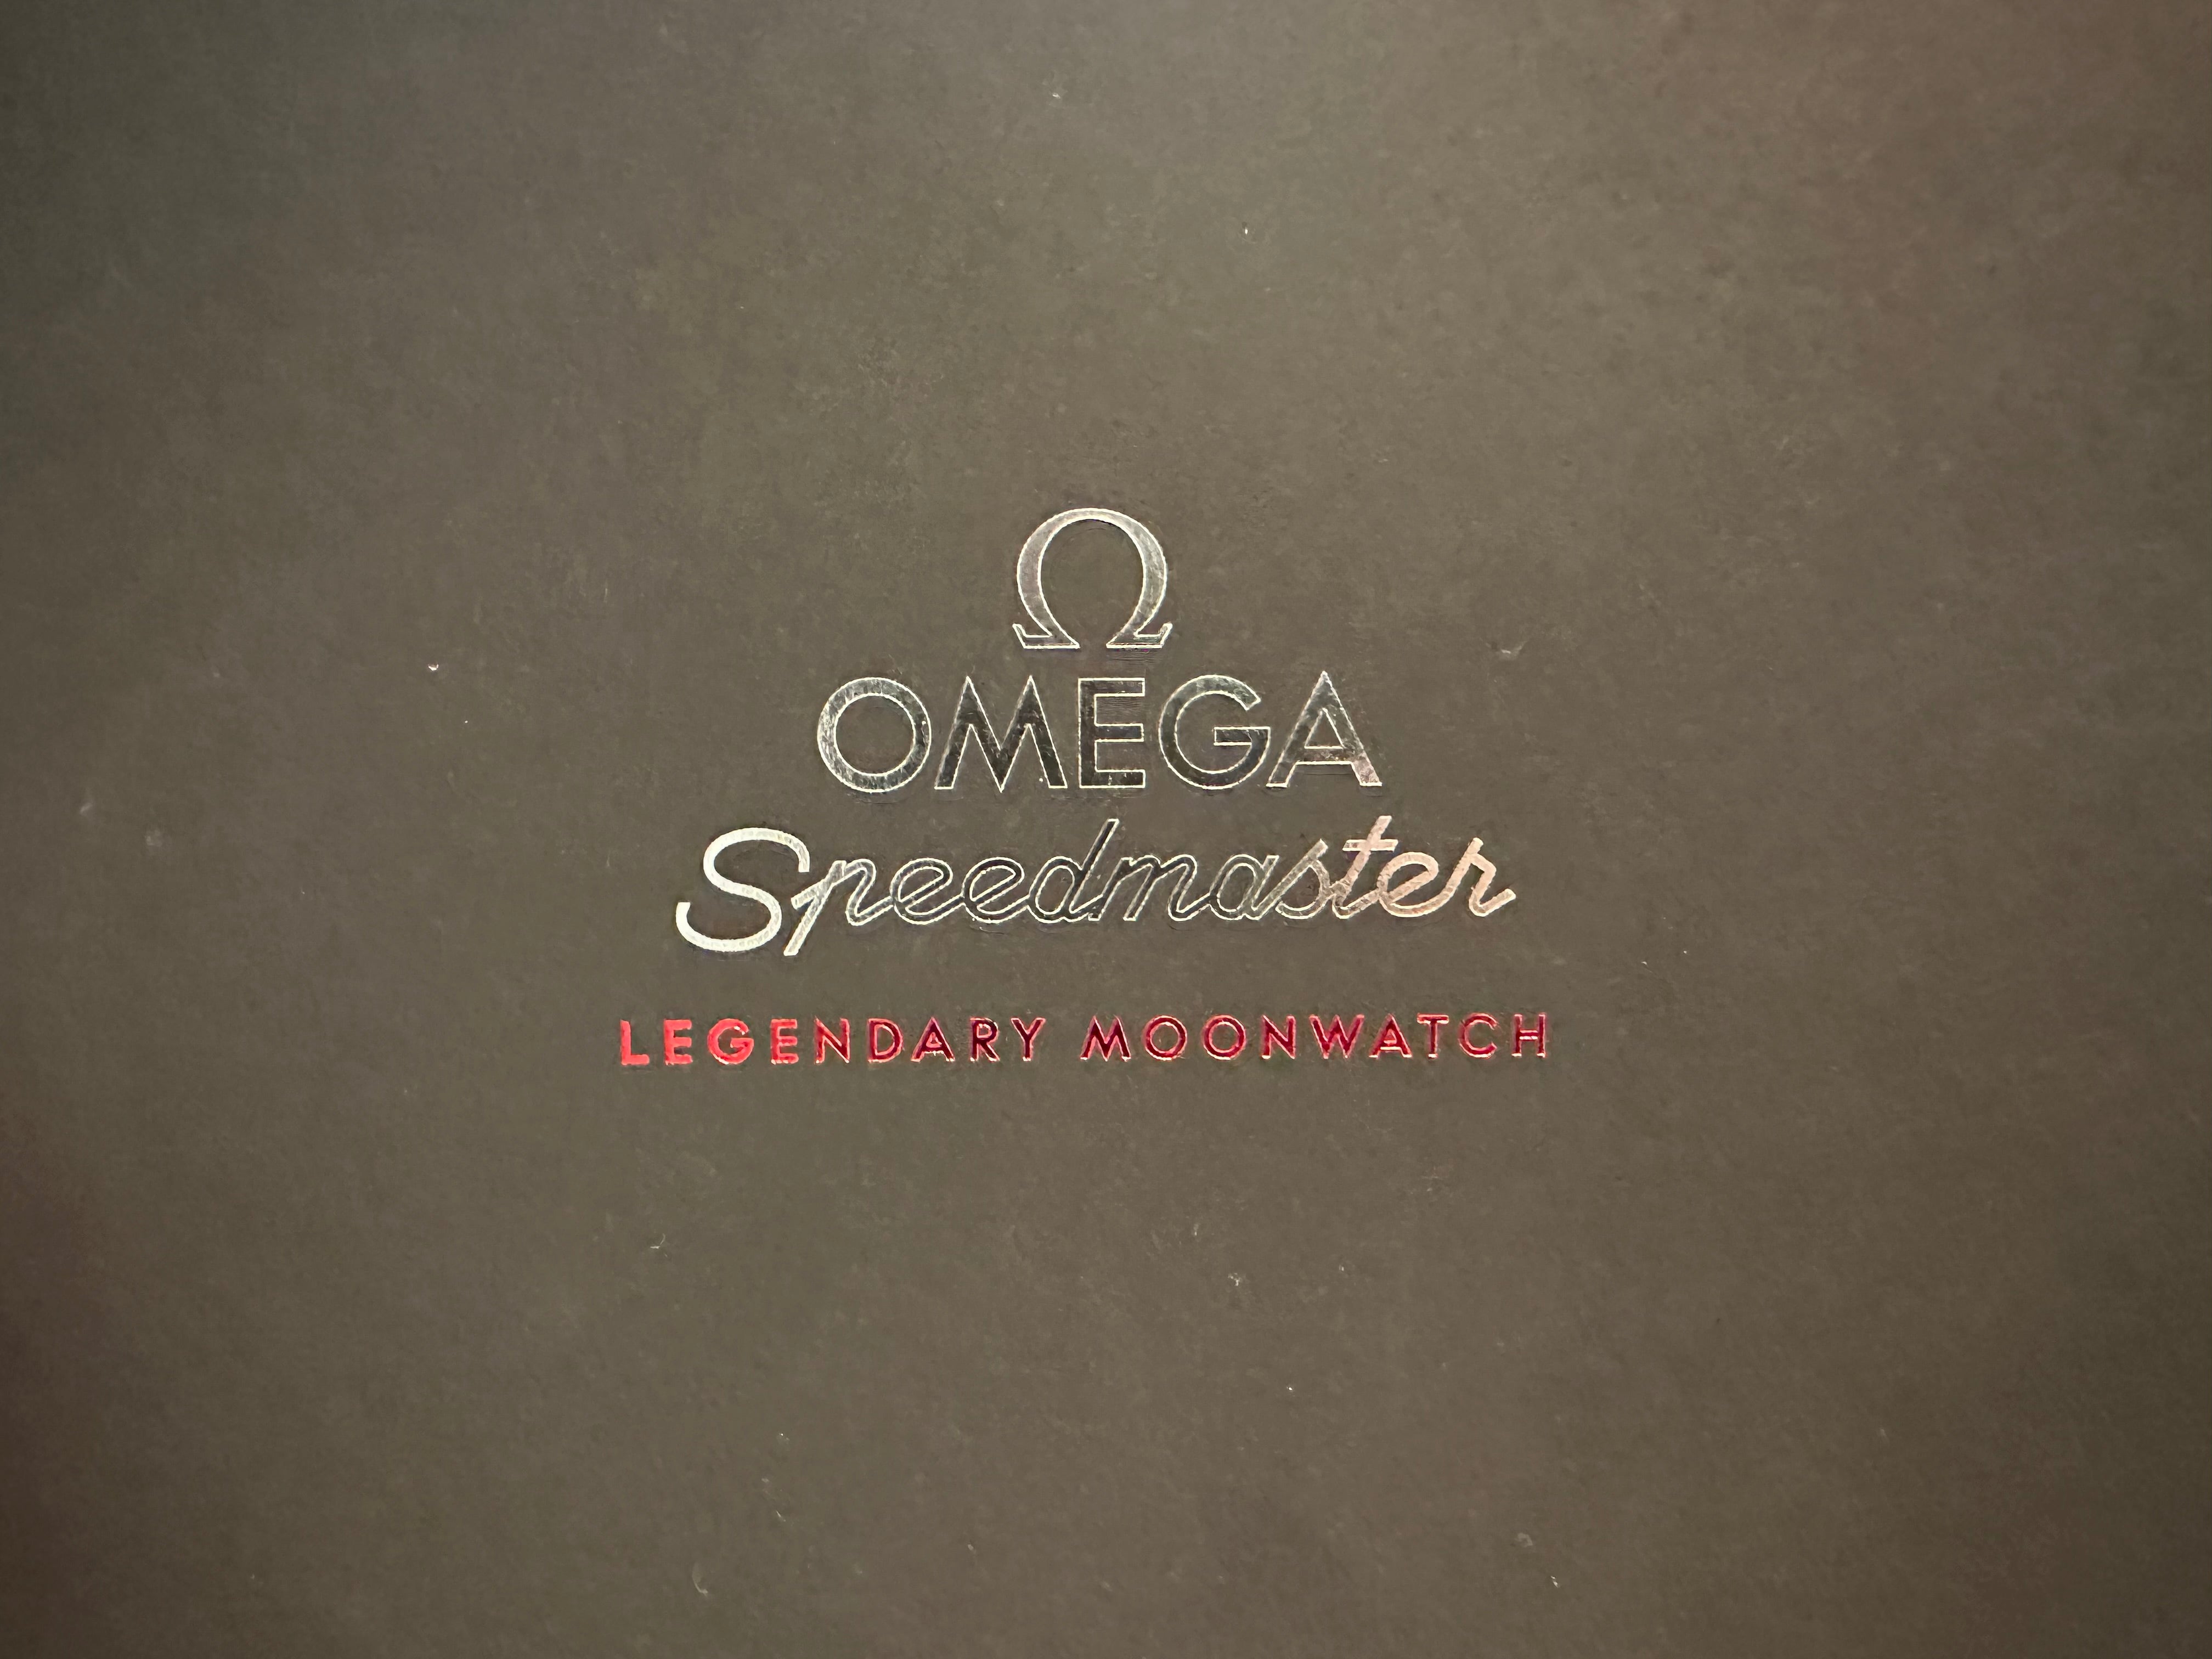 Omega Speedmaster - Legendary Moonwatch